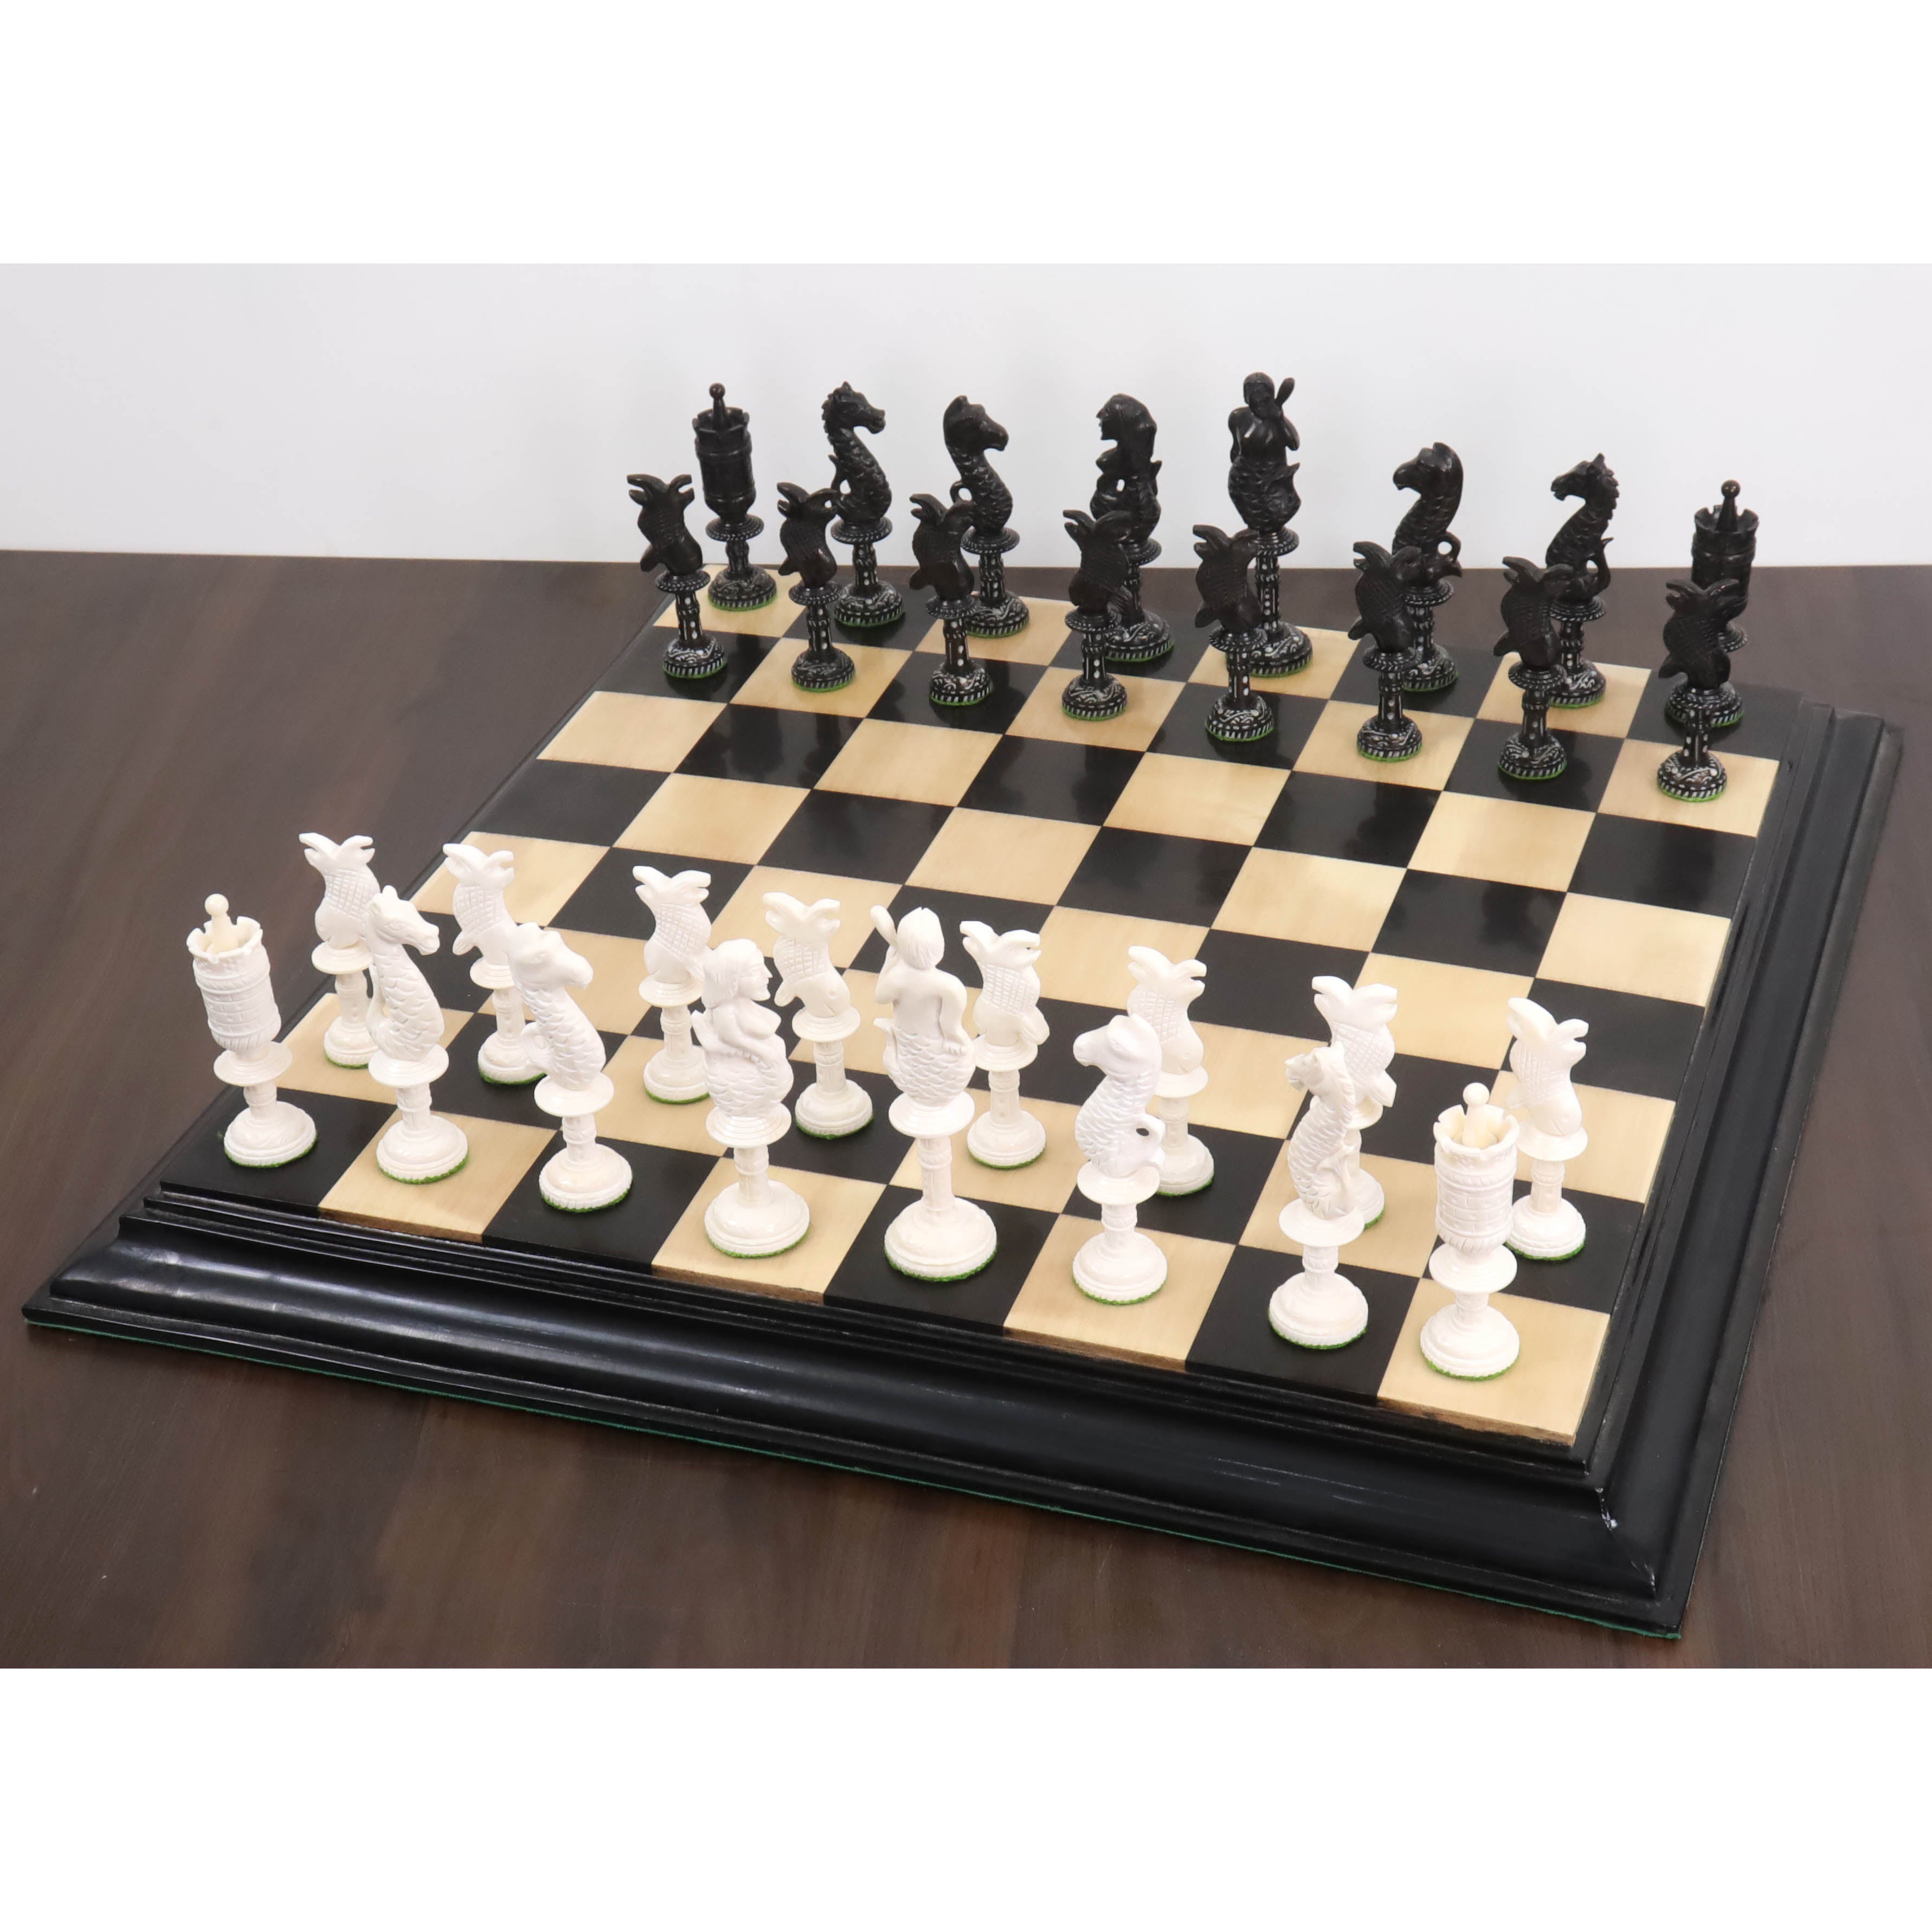 el ajedrez  Chess board, Show beauty, Chess